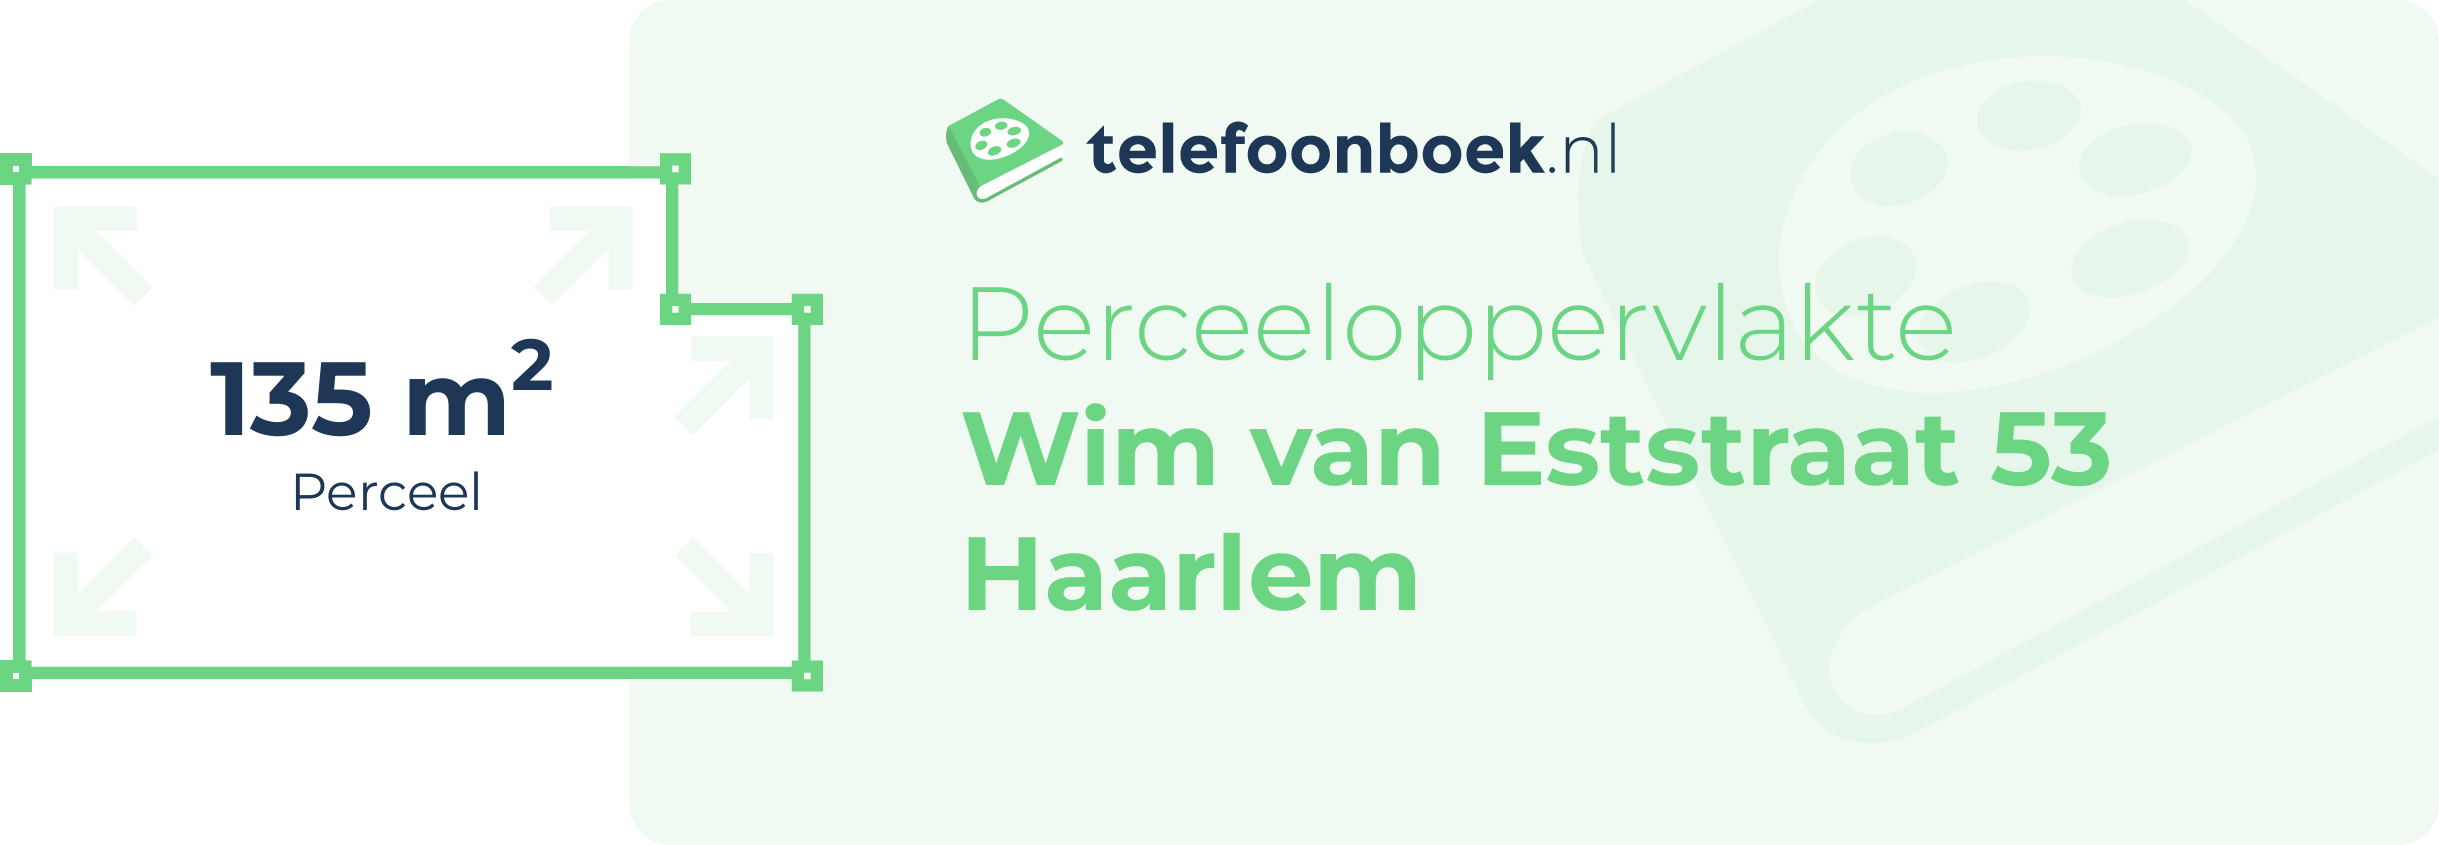 Perceeloppervlakte Wim Van Eststraat 53 Haarlem